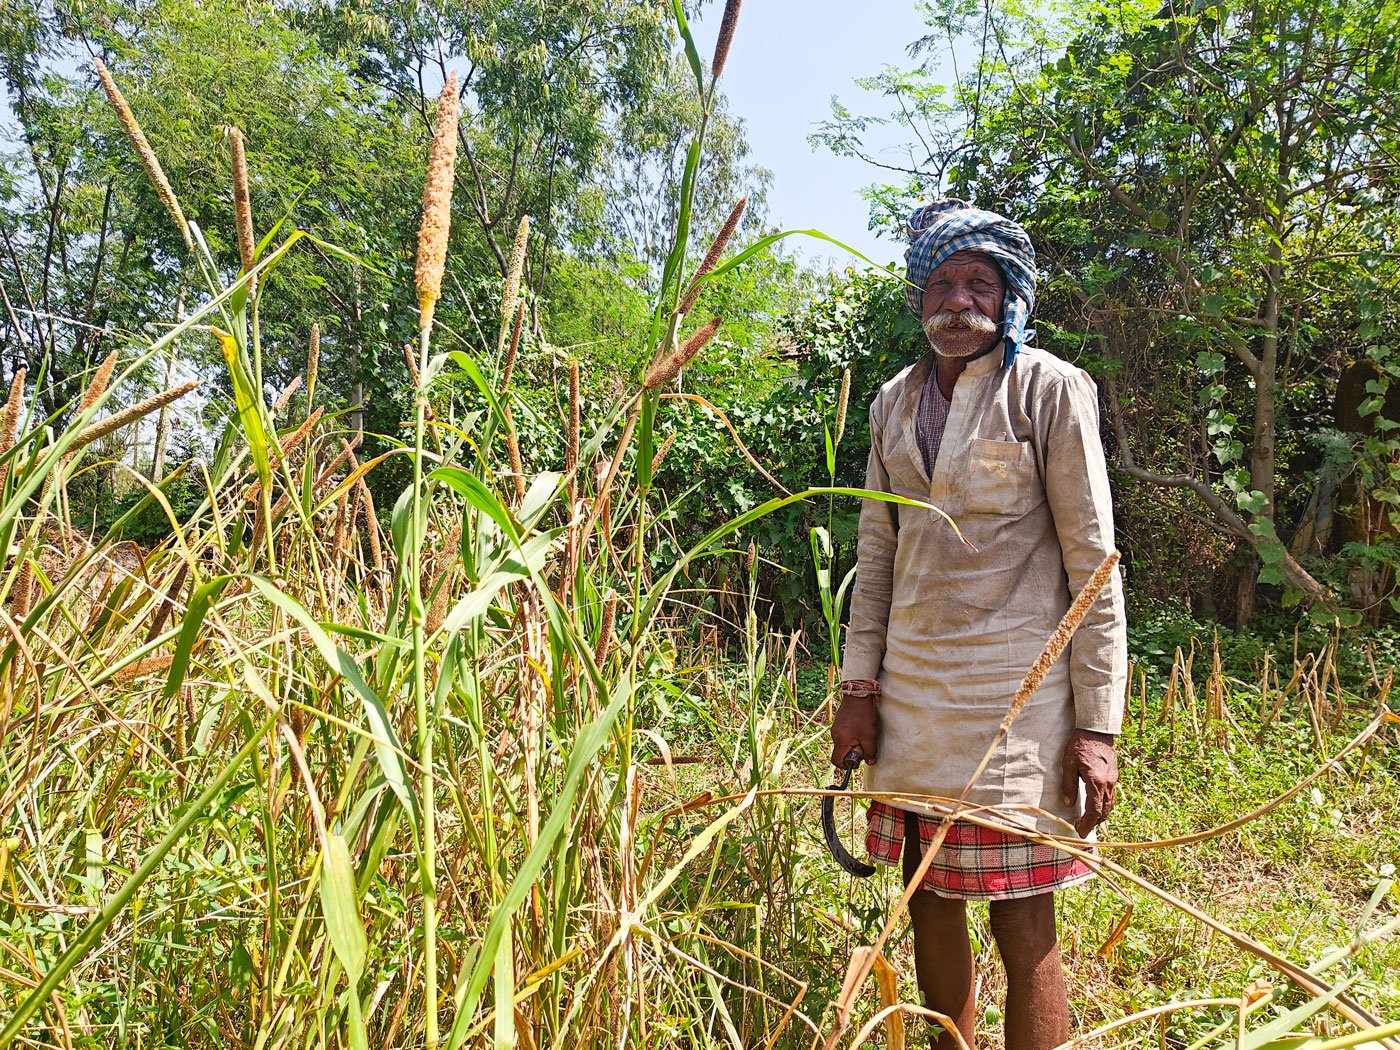 Jamnalal's family belongs to the Sahariya Adivasi tribe. He is seen here chopping soyabean in Dhanoriya.